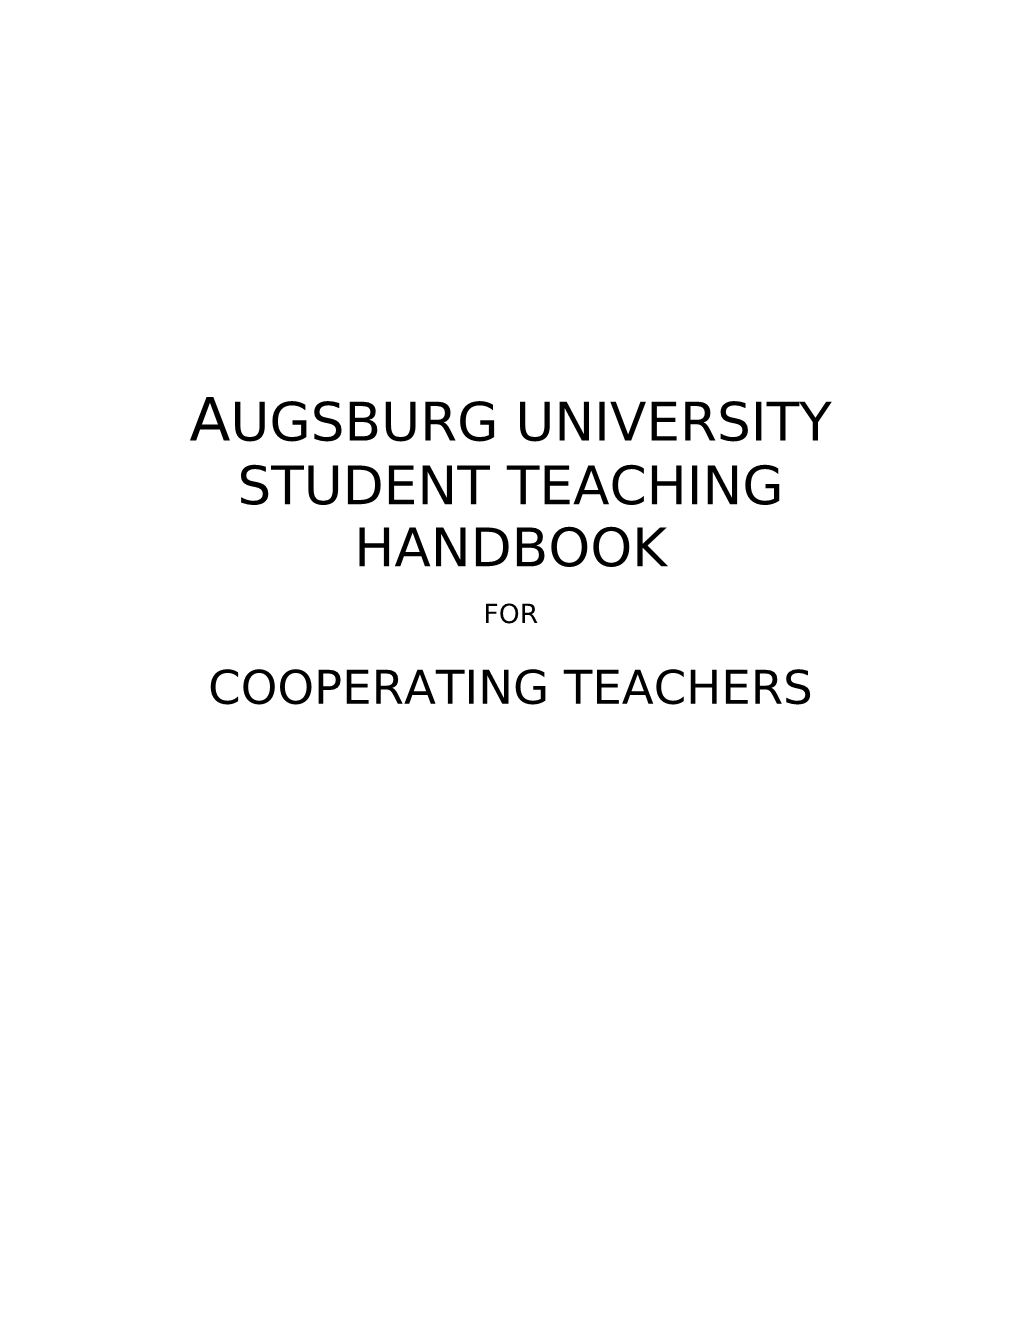 Augsburg University Mission Statement